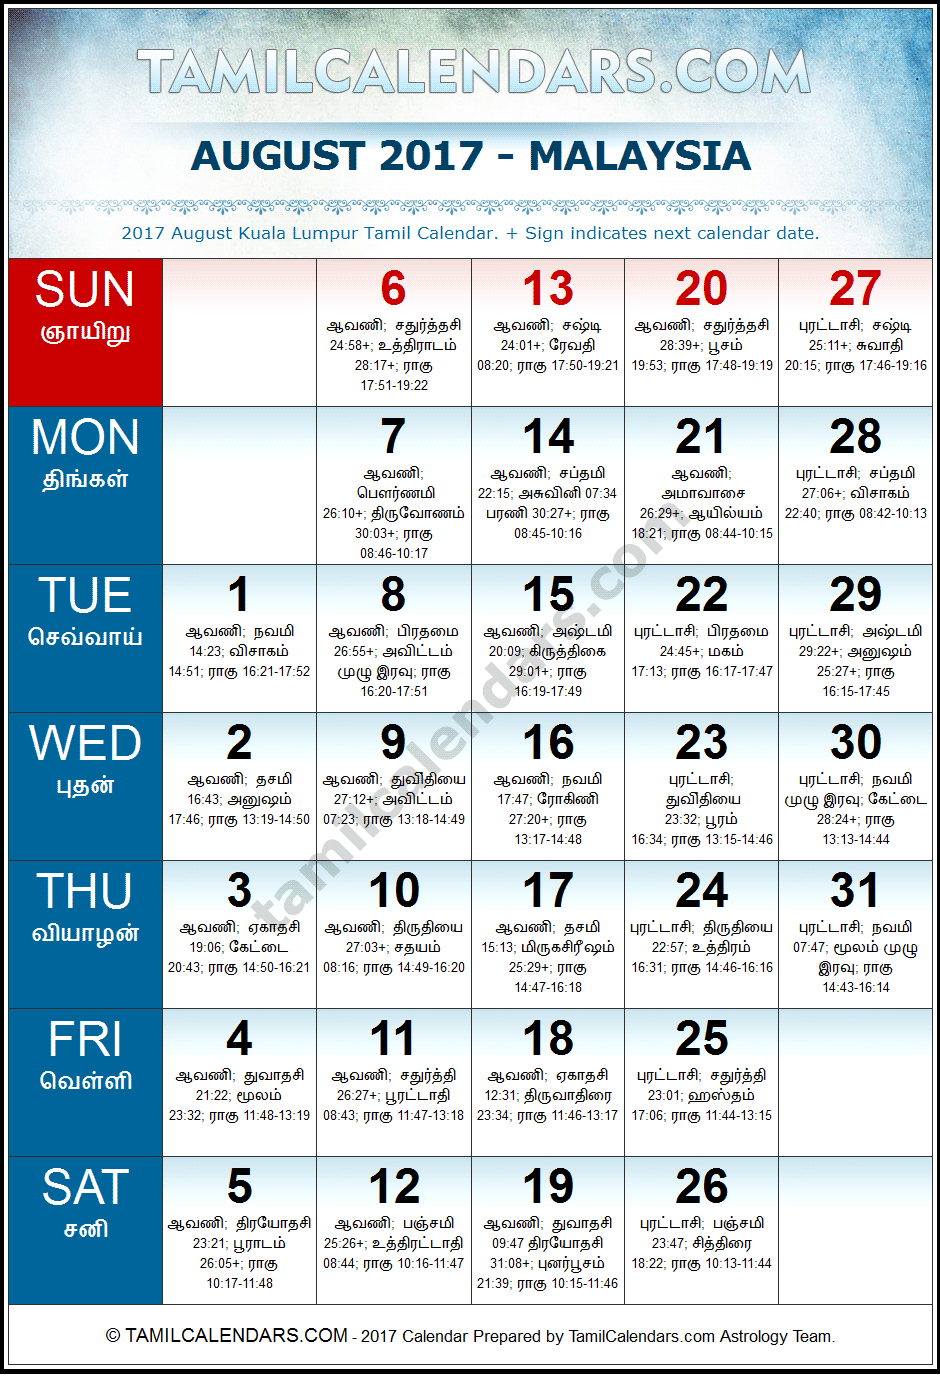 August 2017 Tamil Calendar for Malaysia (Kuala Lumpur)